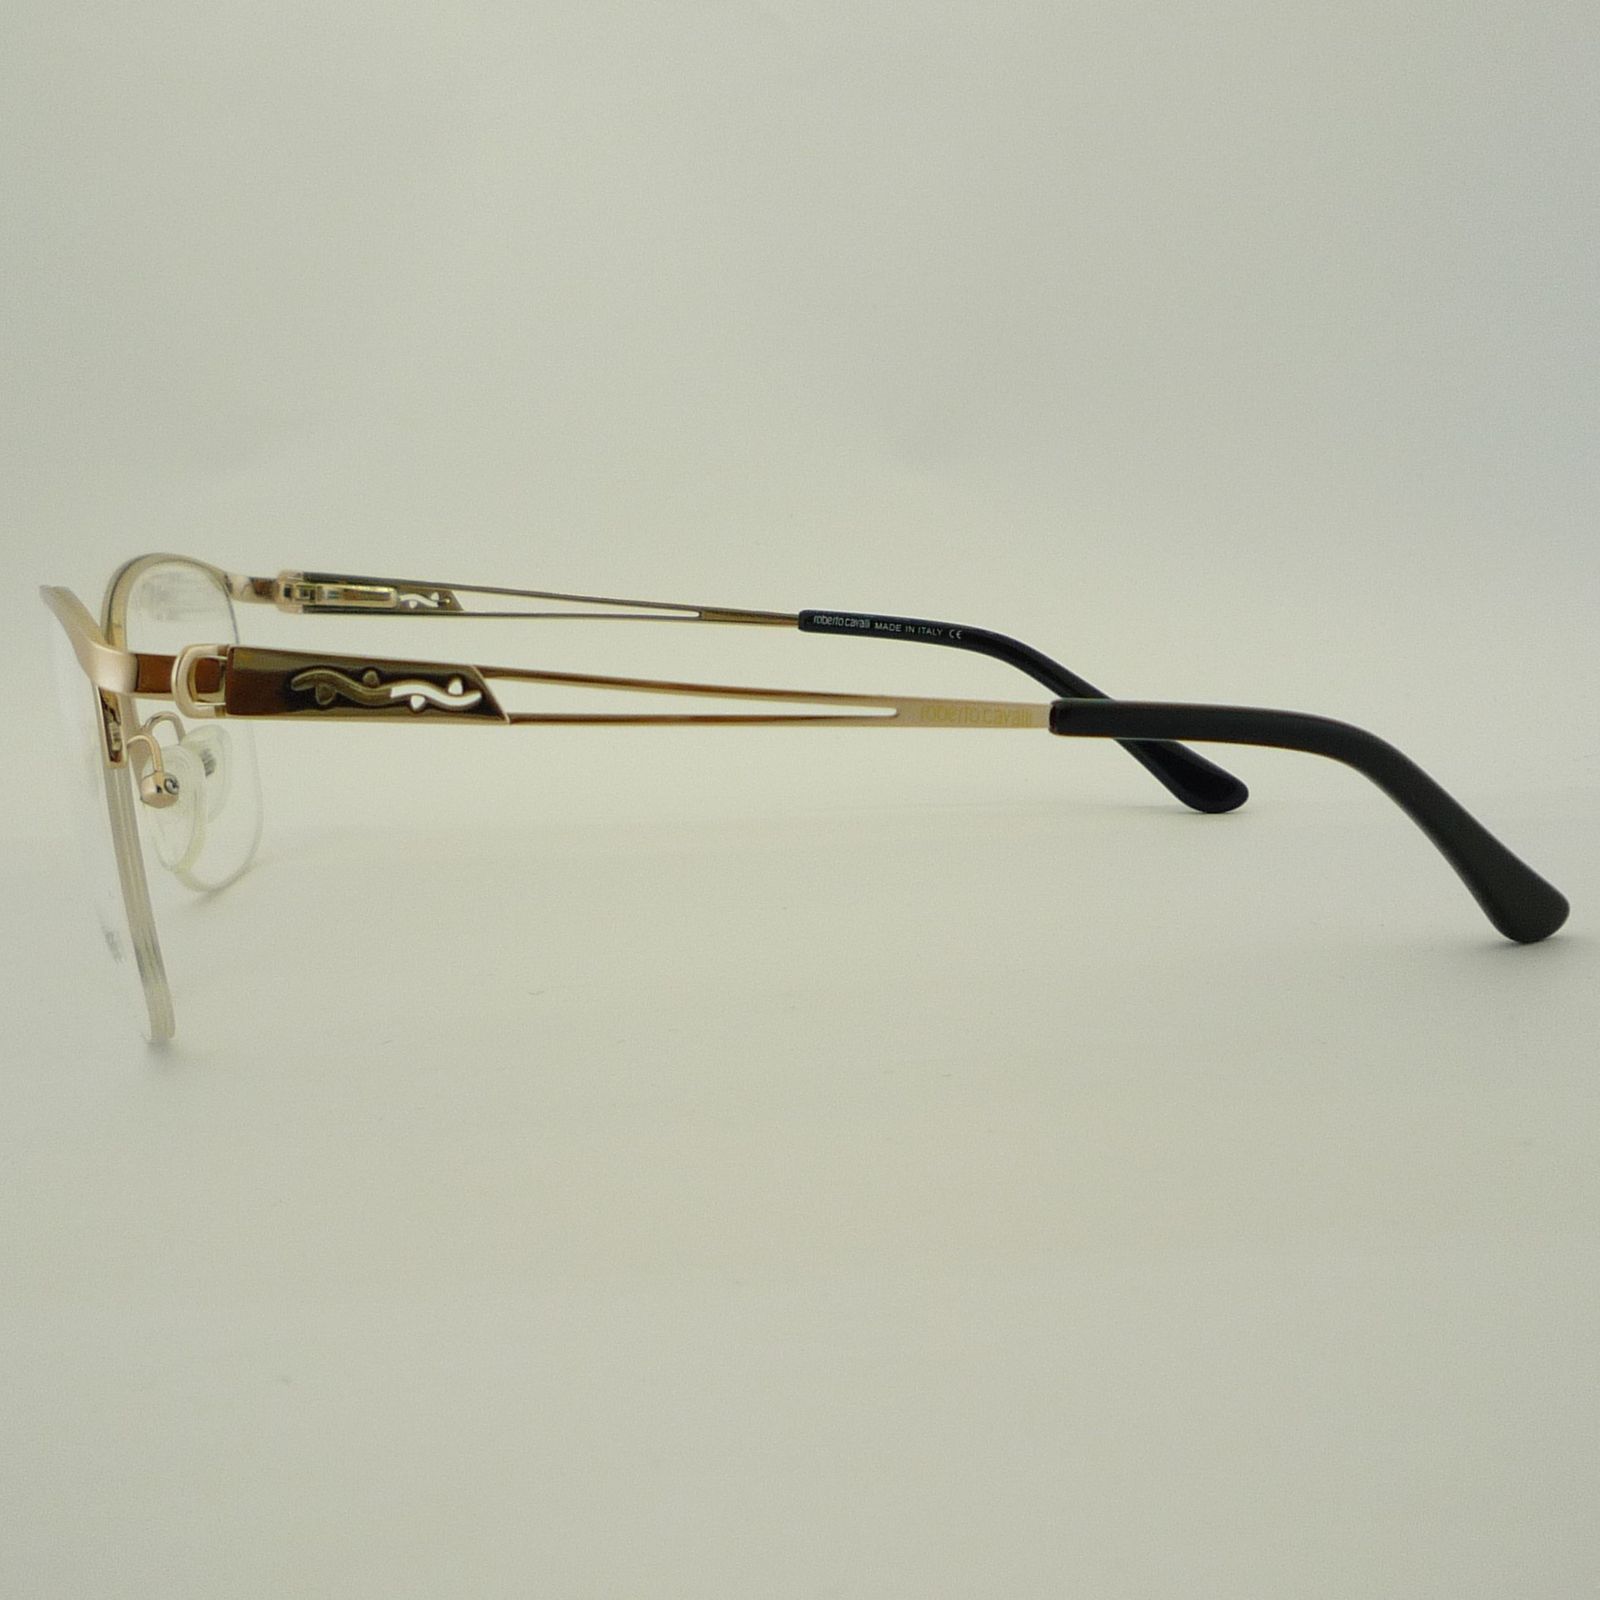 فریم عینک طبی زنانه روبرتو کاوالی مدل 45560223C1 -  - 8